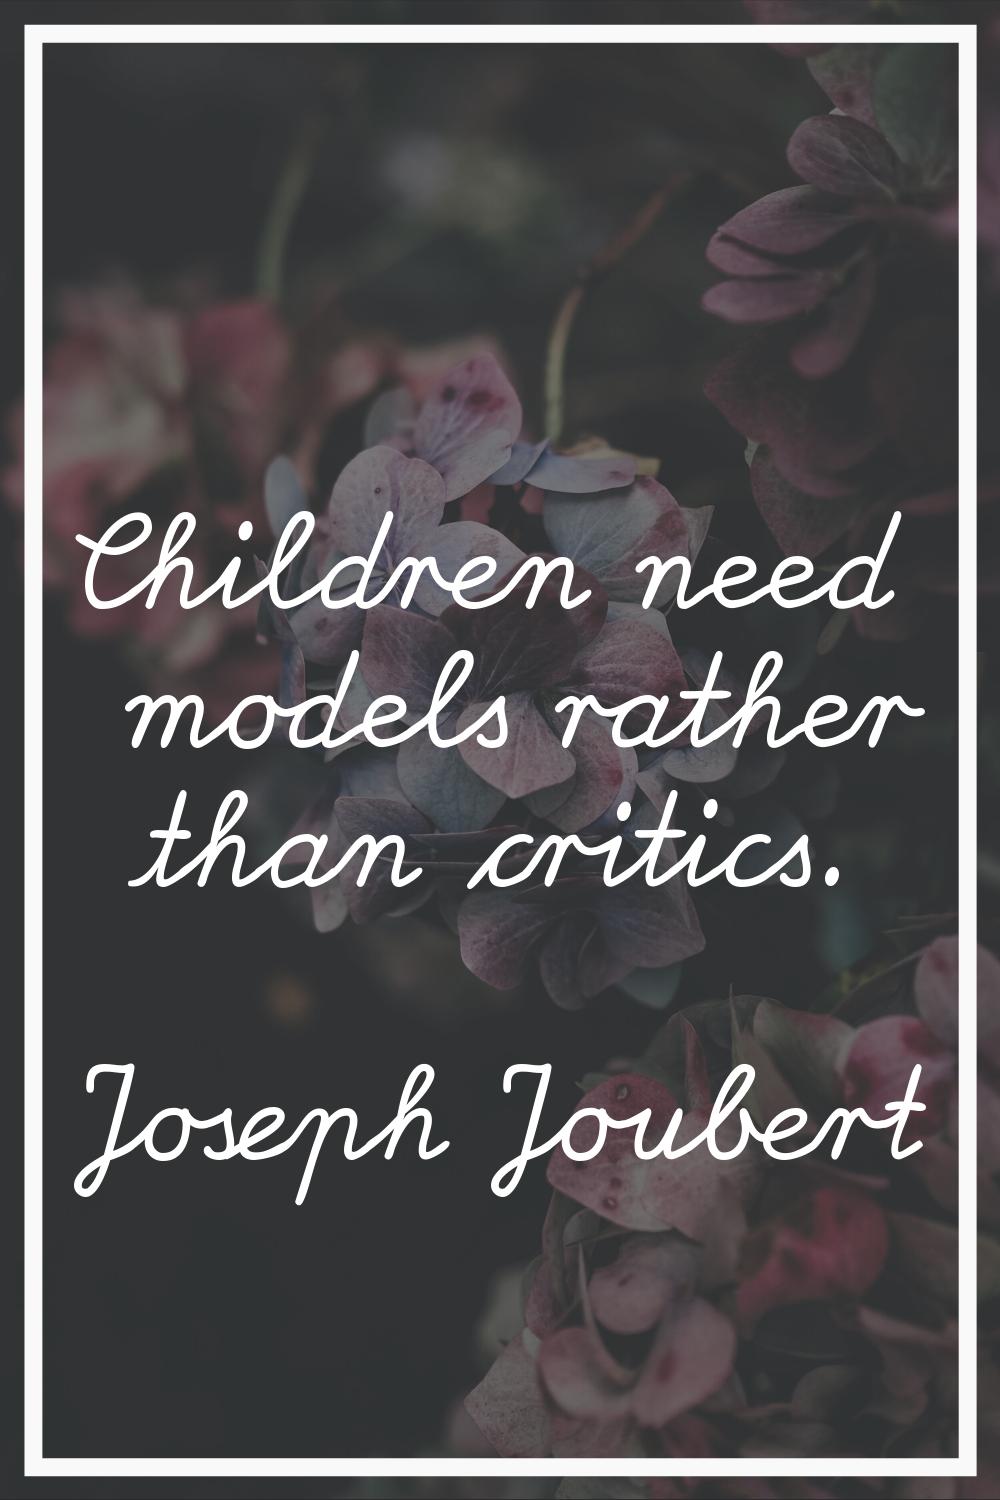 Children need models rather than critics.